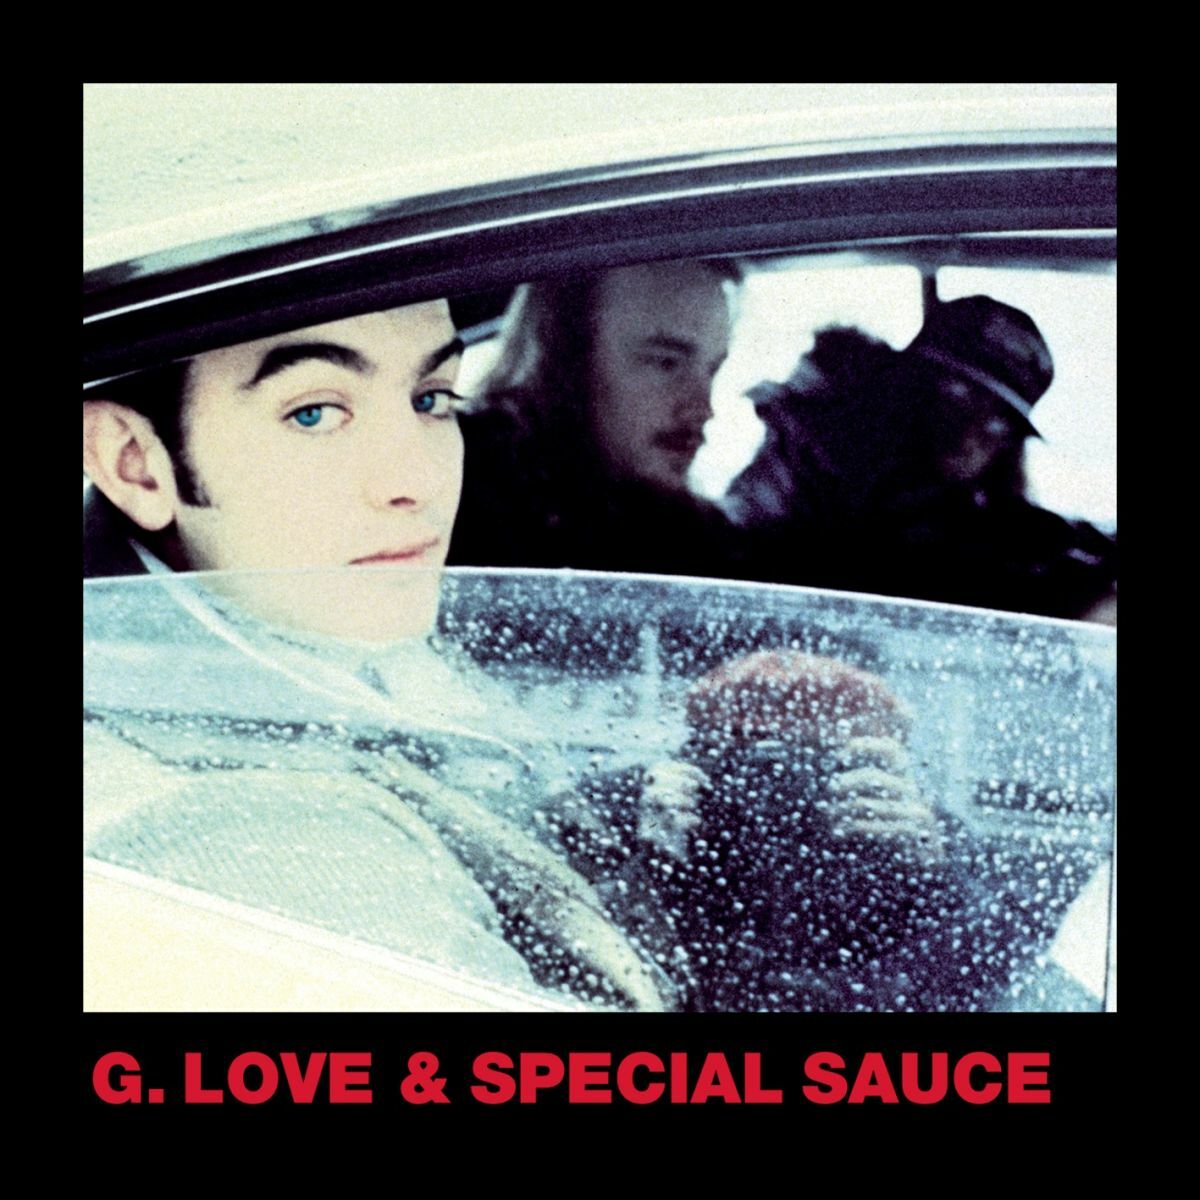 G. Love & Special Sauce: albums, songs, playlists | Listen on Deezer